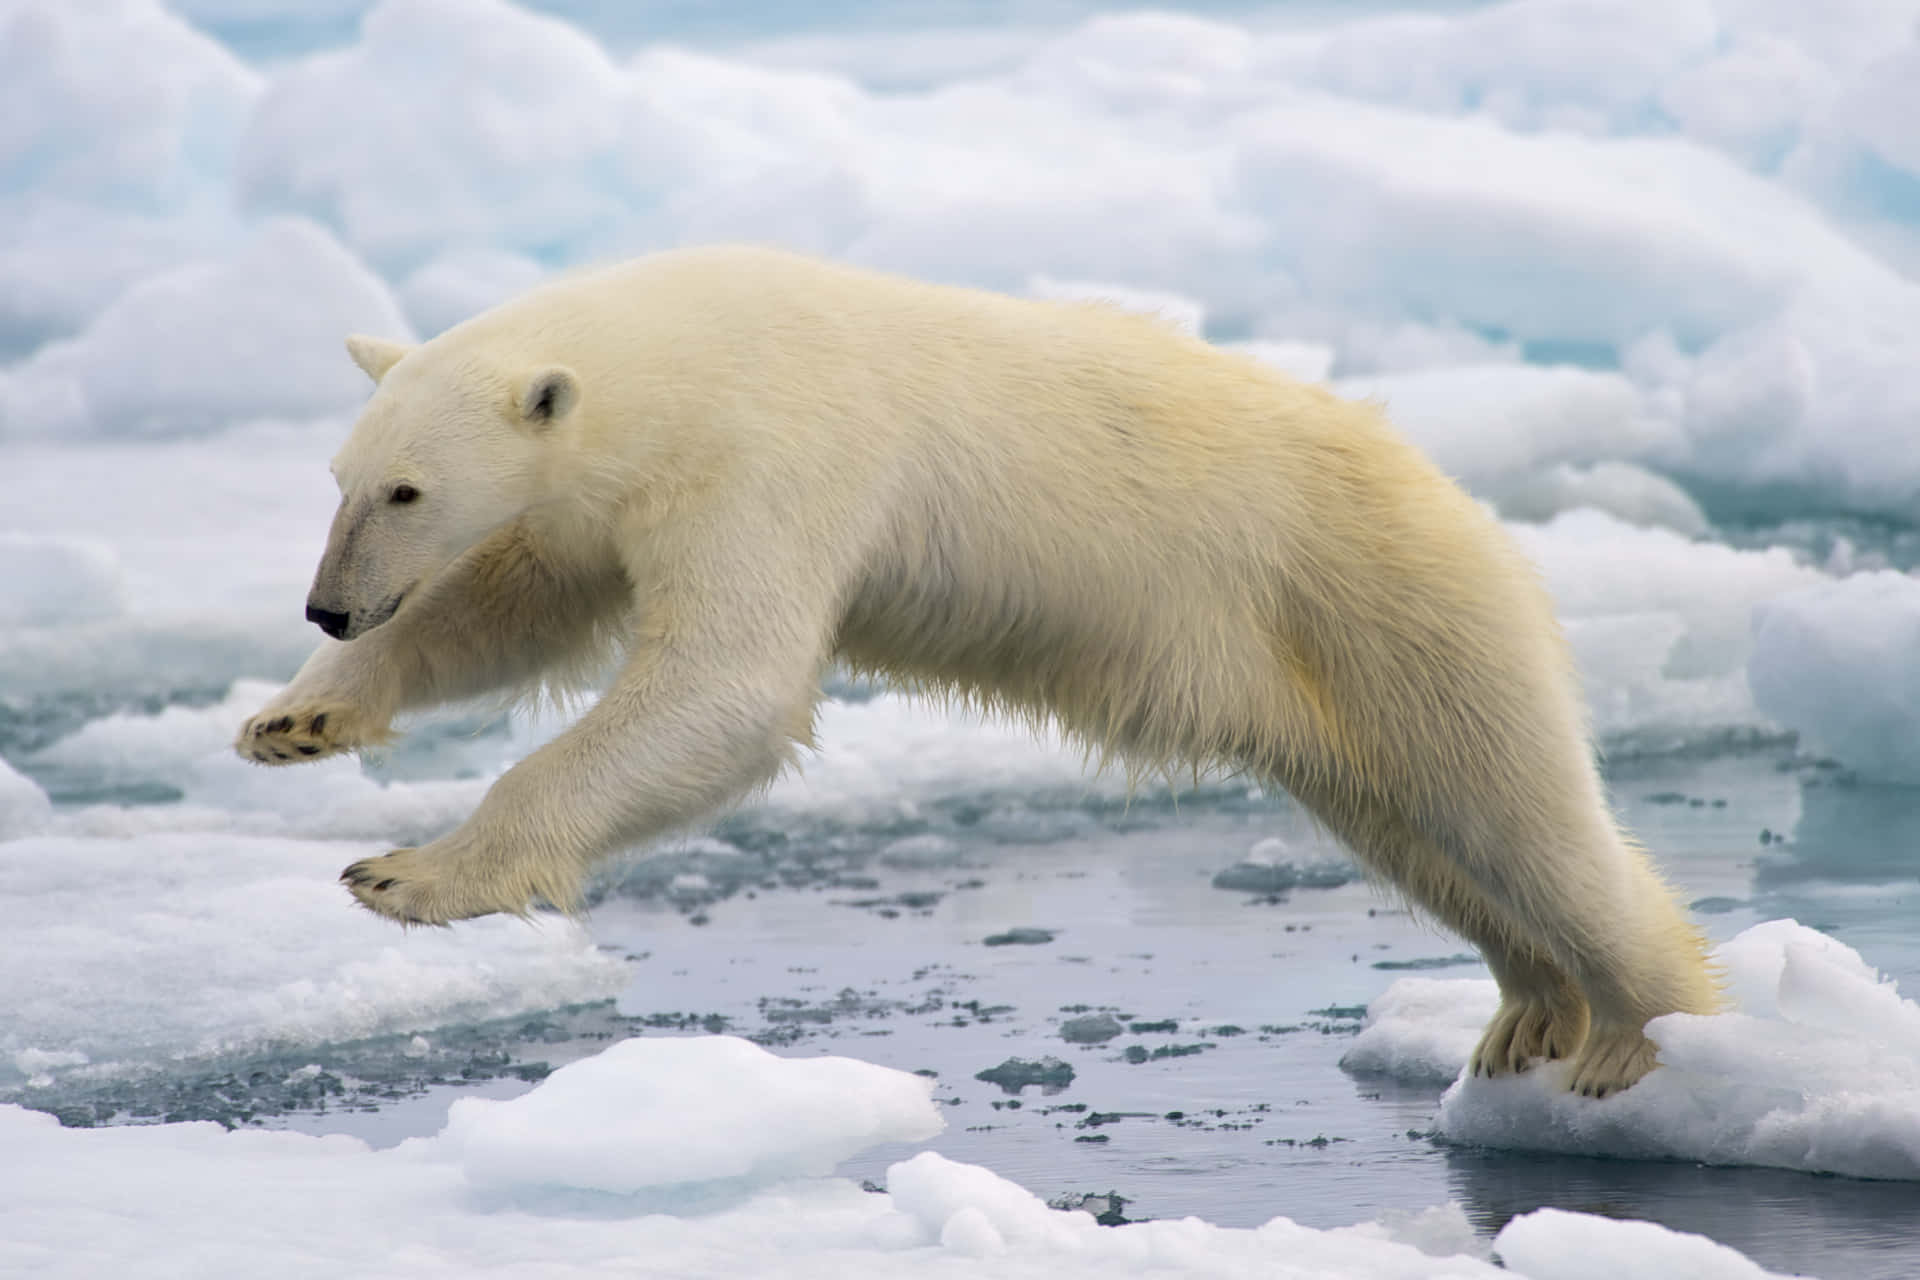 A close-up shot of a majestic polar bear in its natural habitat